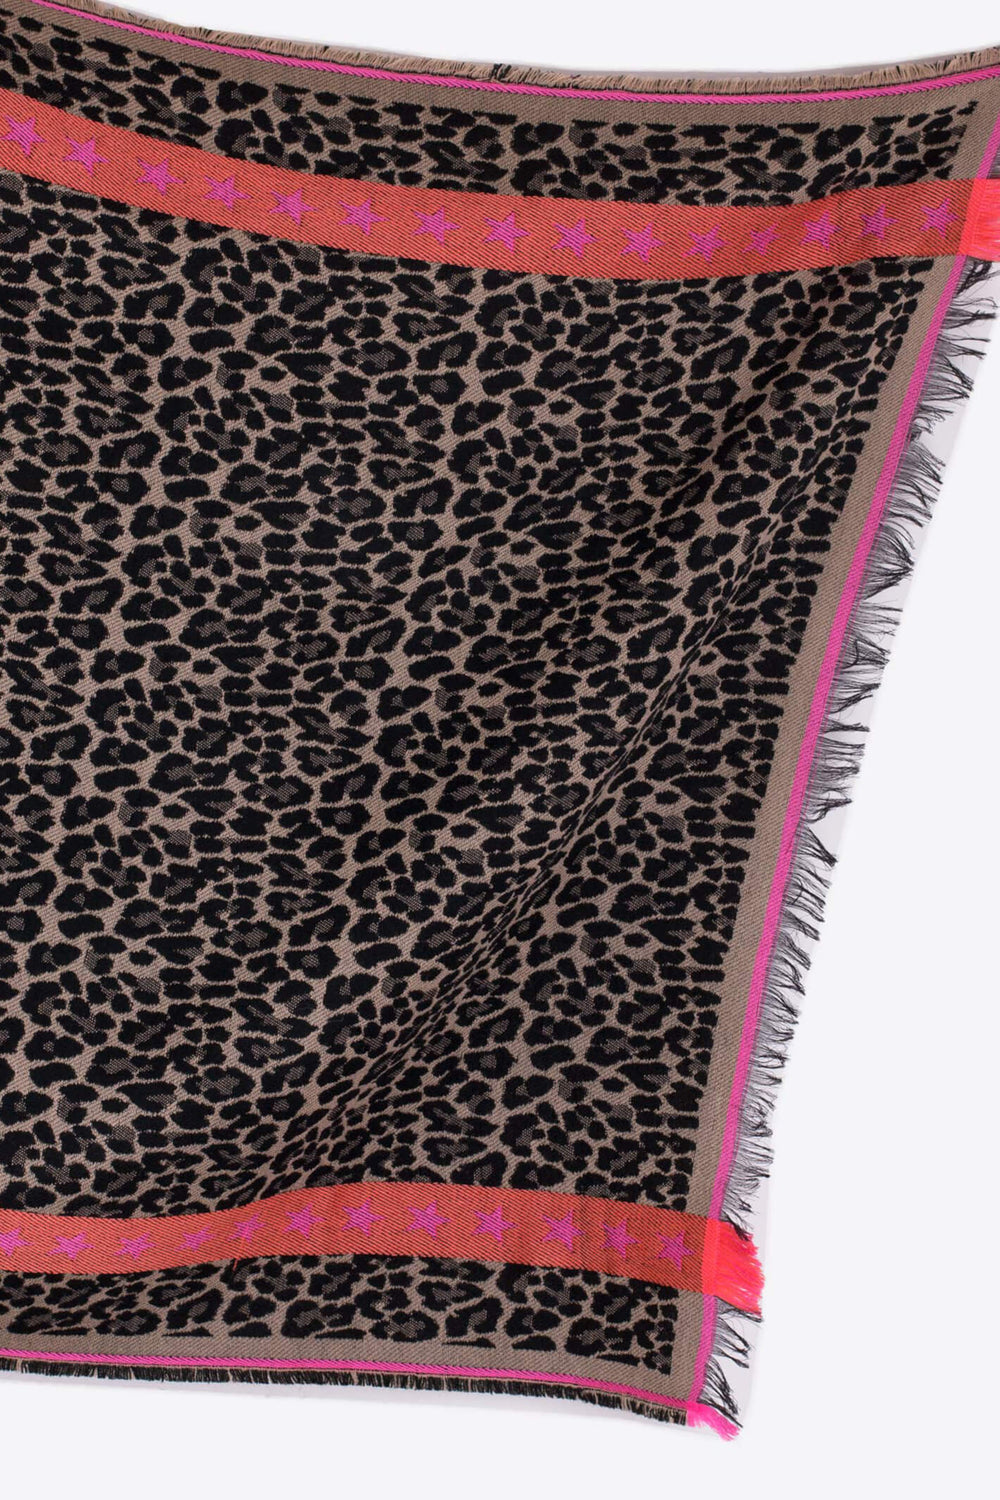 Vilagallo 30656 Neon Stripes Leopard Print Scarf - Experience Boutique